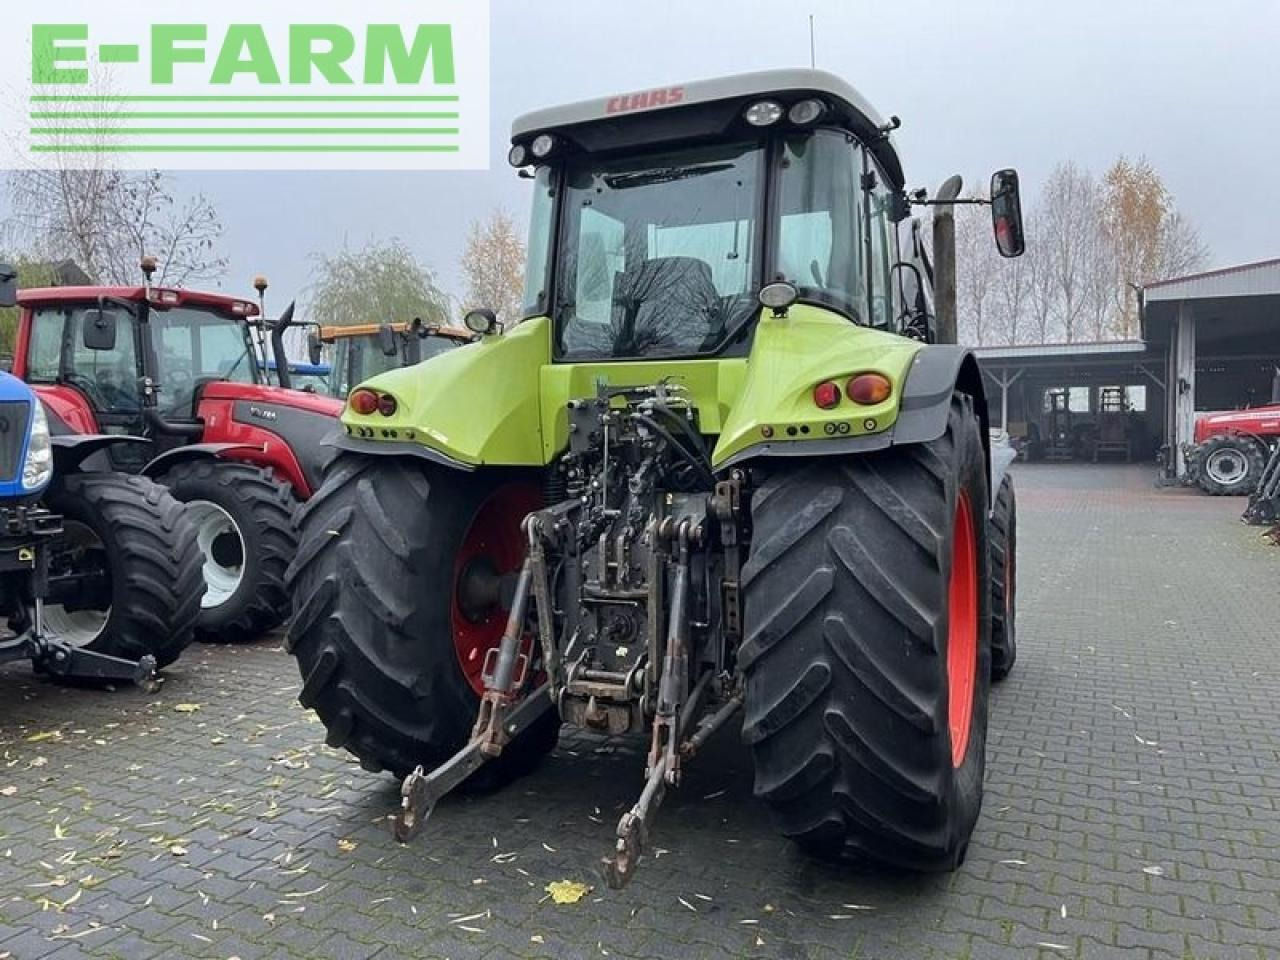 Tracteur agricole CLAAS arion 640 cis + quicke q65